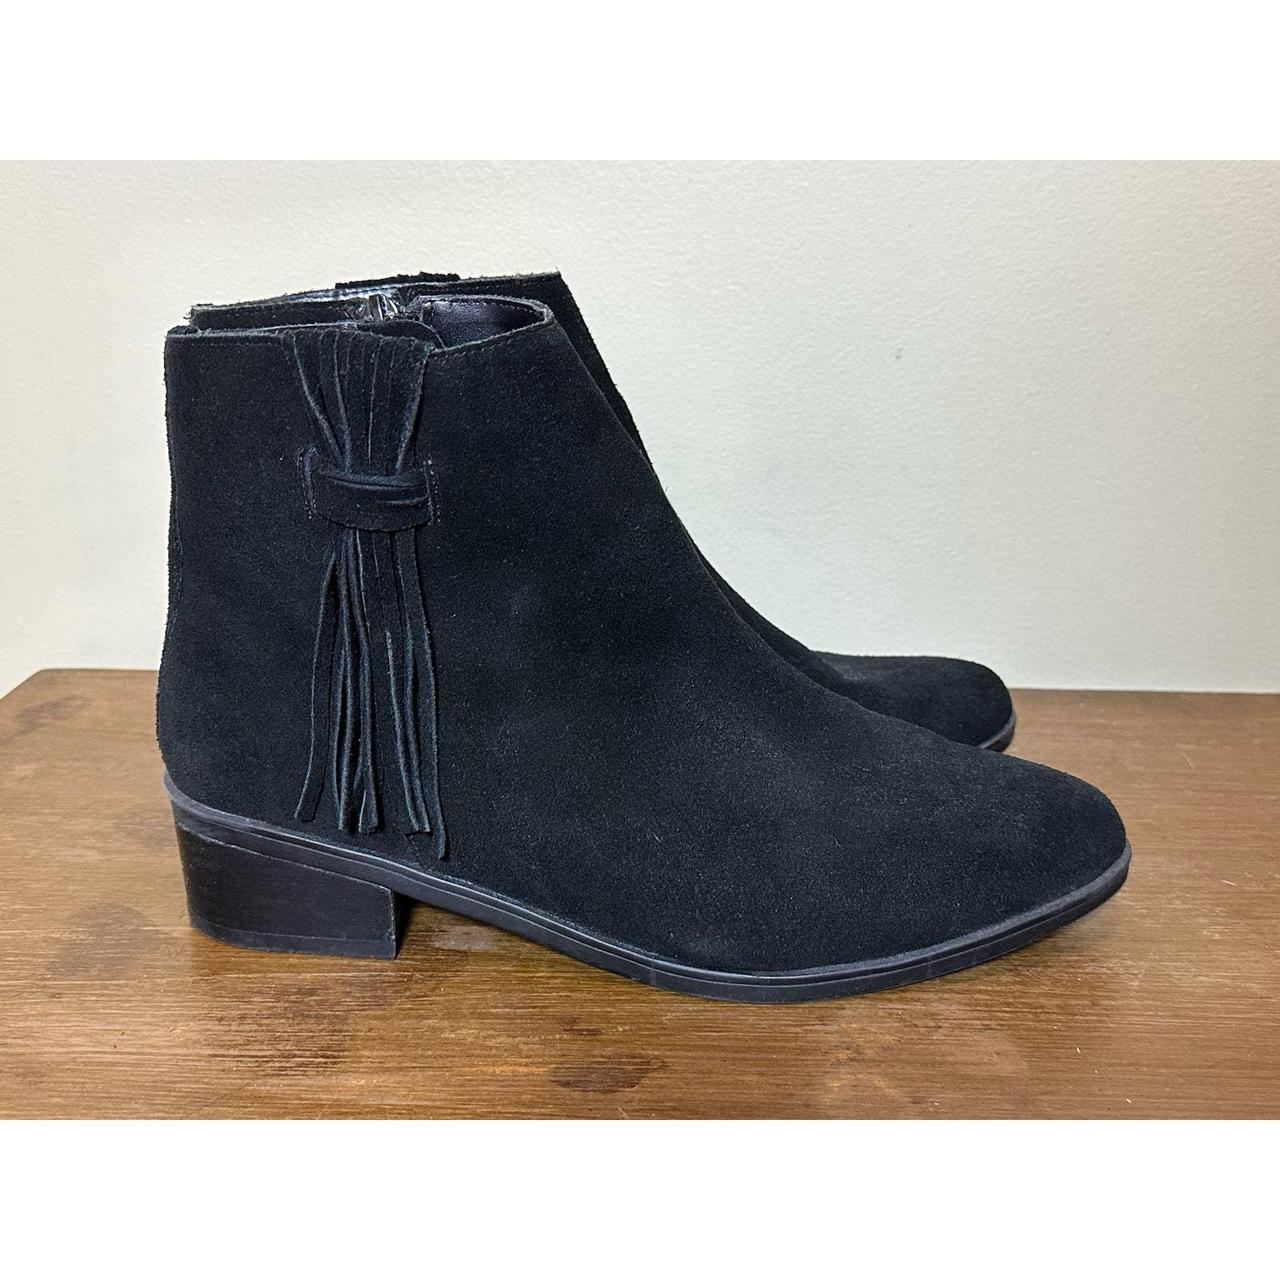 Bella Vita Women's Black Boots (4)